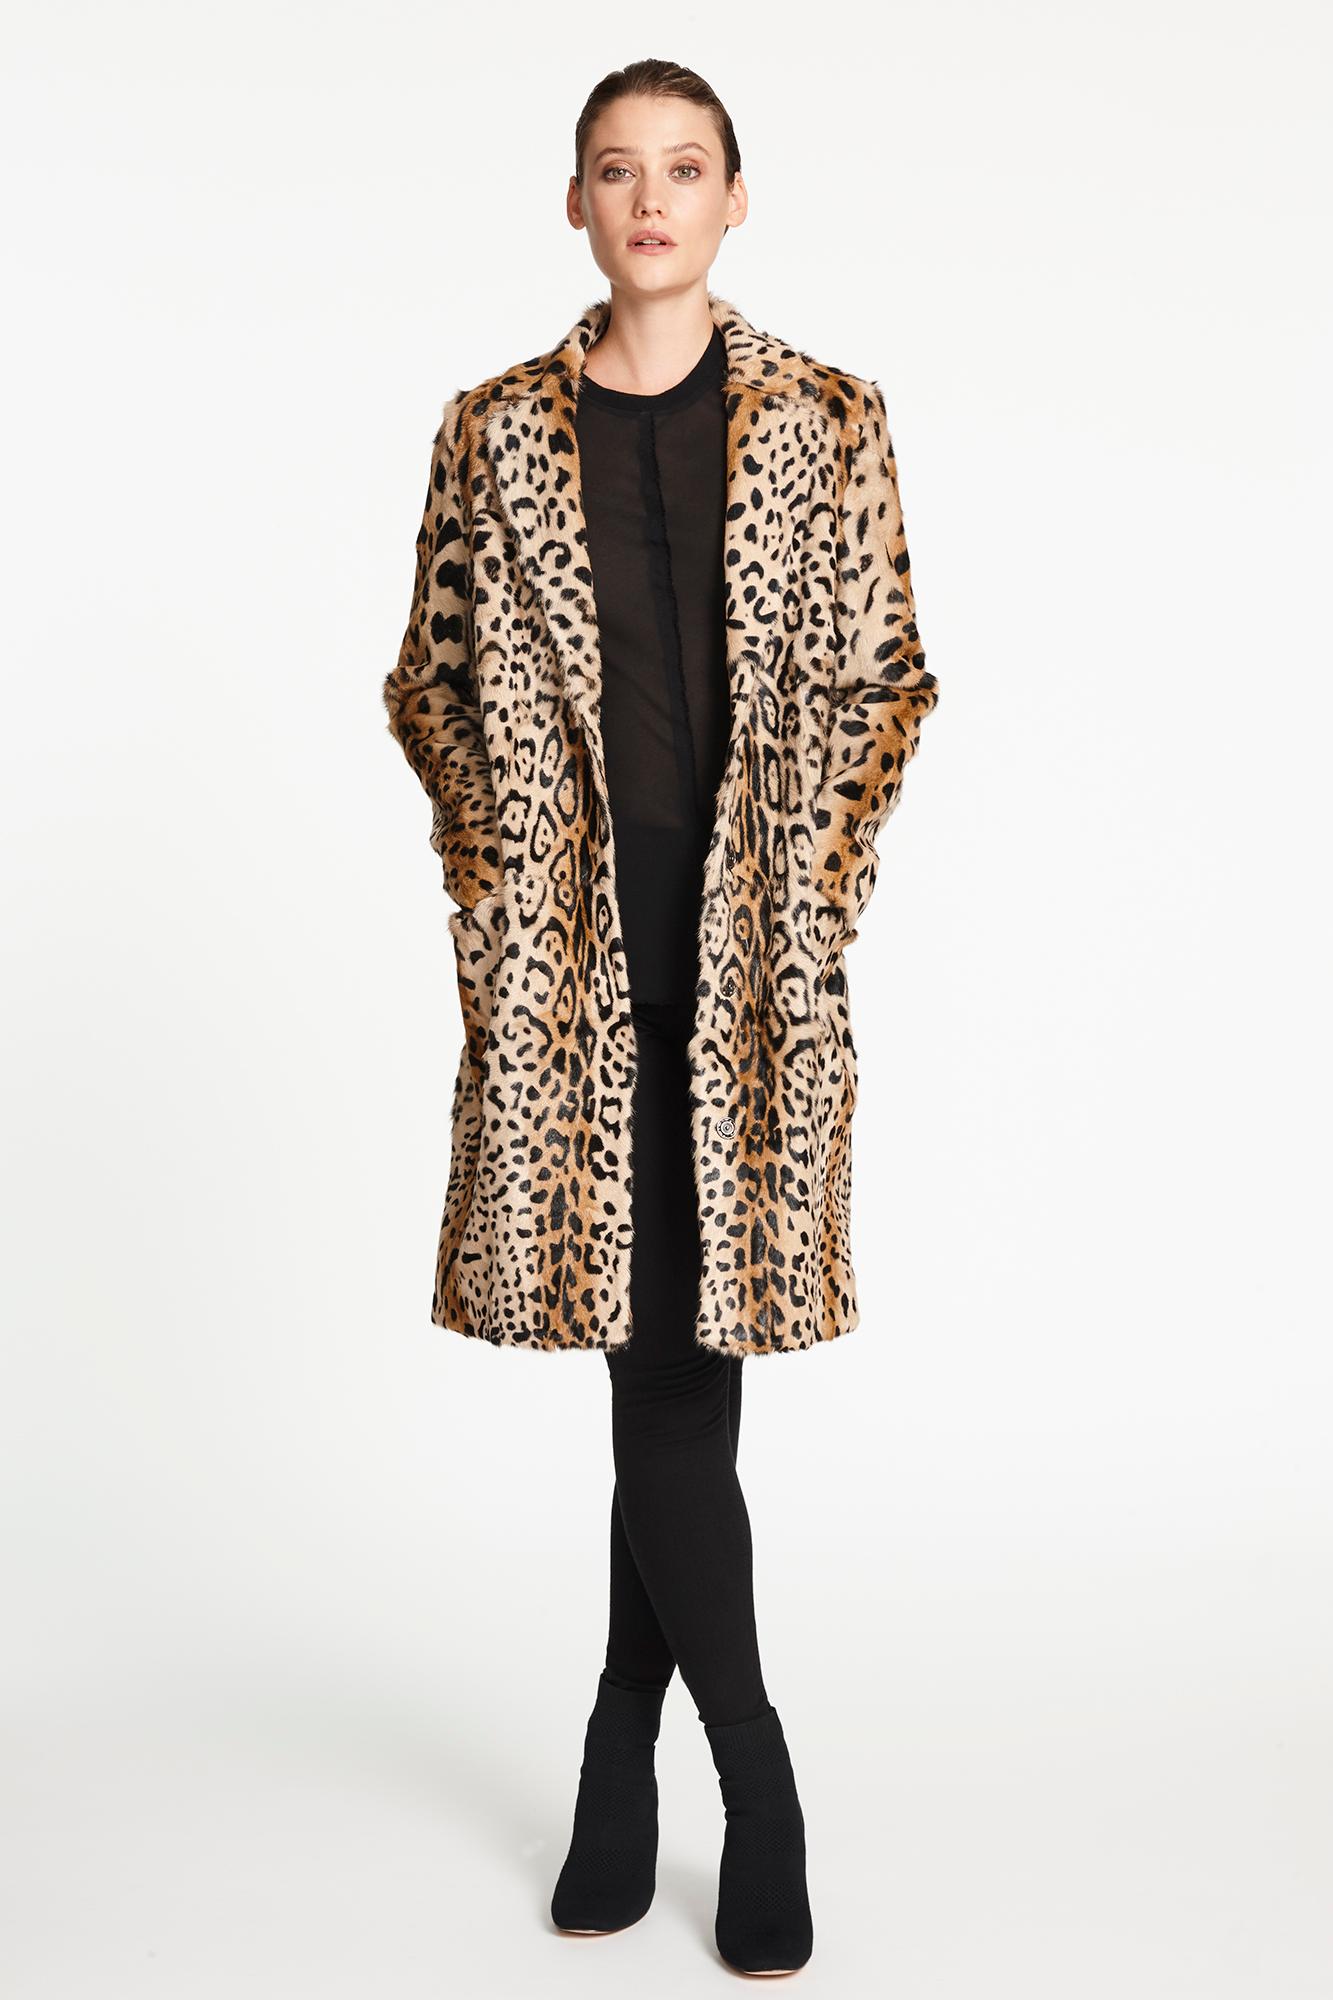 Verheyen London Leopard Print Coat in Red Ruby Goat Hair Fur UK 12  - Brand New  2